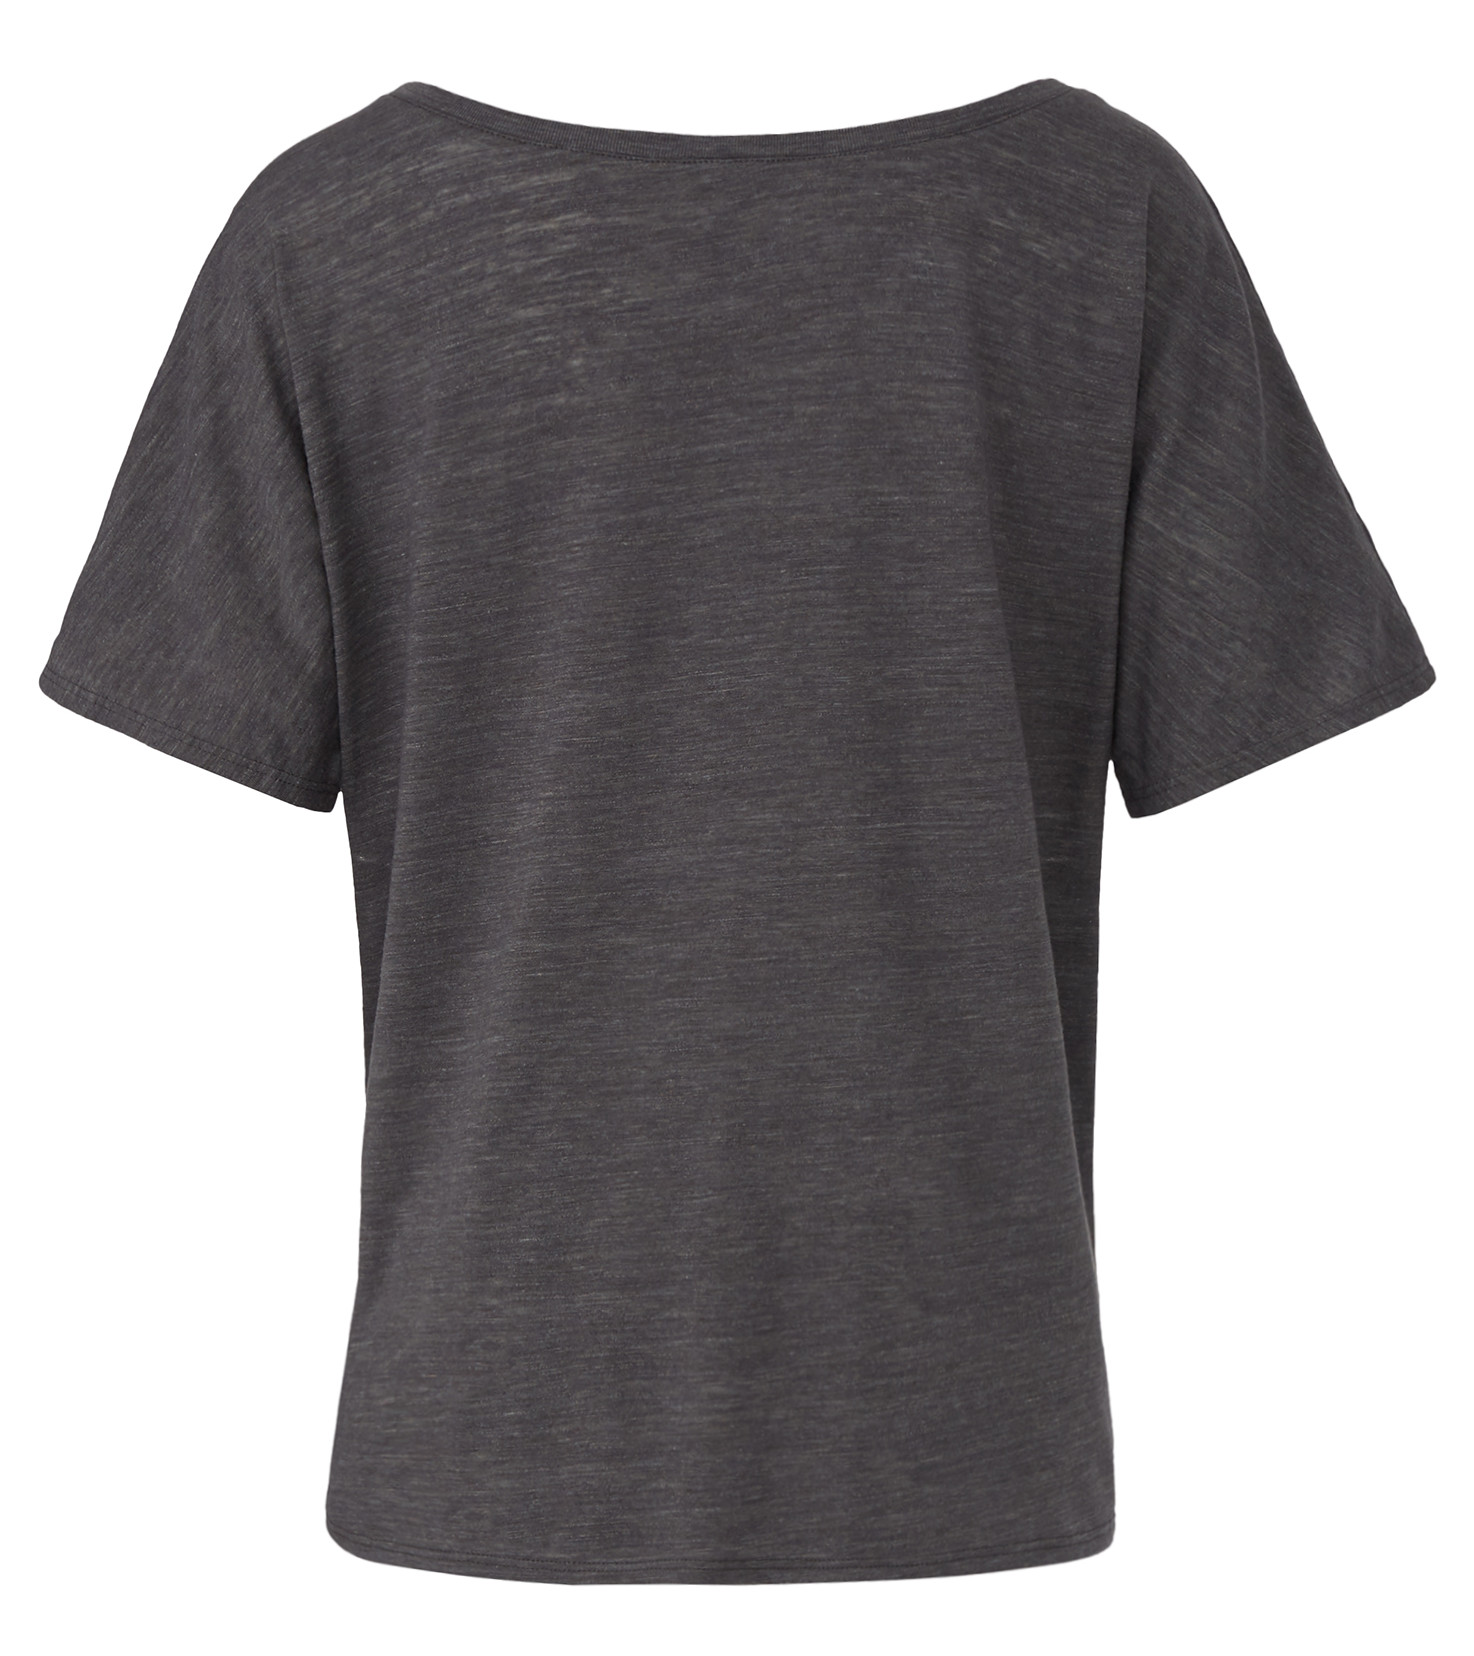 Custom Women's Grey Slouchy Crystal Rhinestones Fashion Tee Shirt